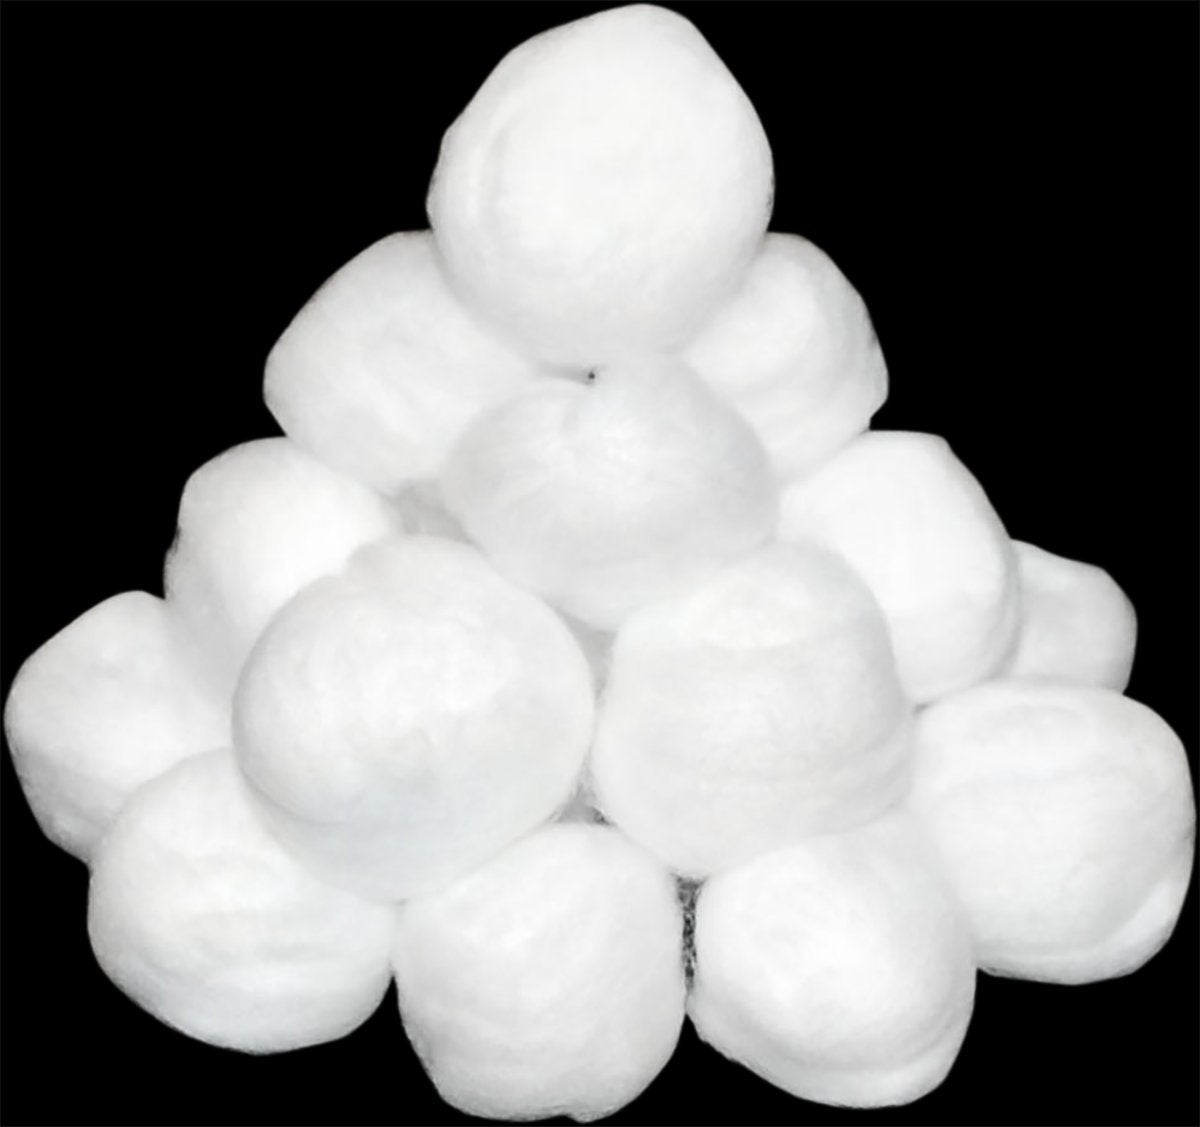 Dukal - 802 Cotton Balls, Non Sterile, Large (Pack of 2000)